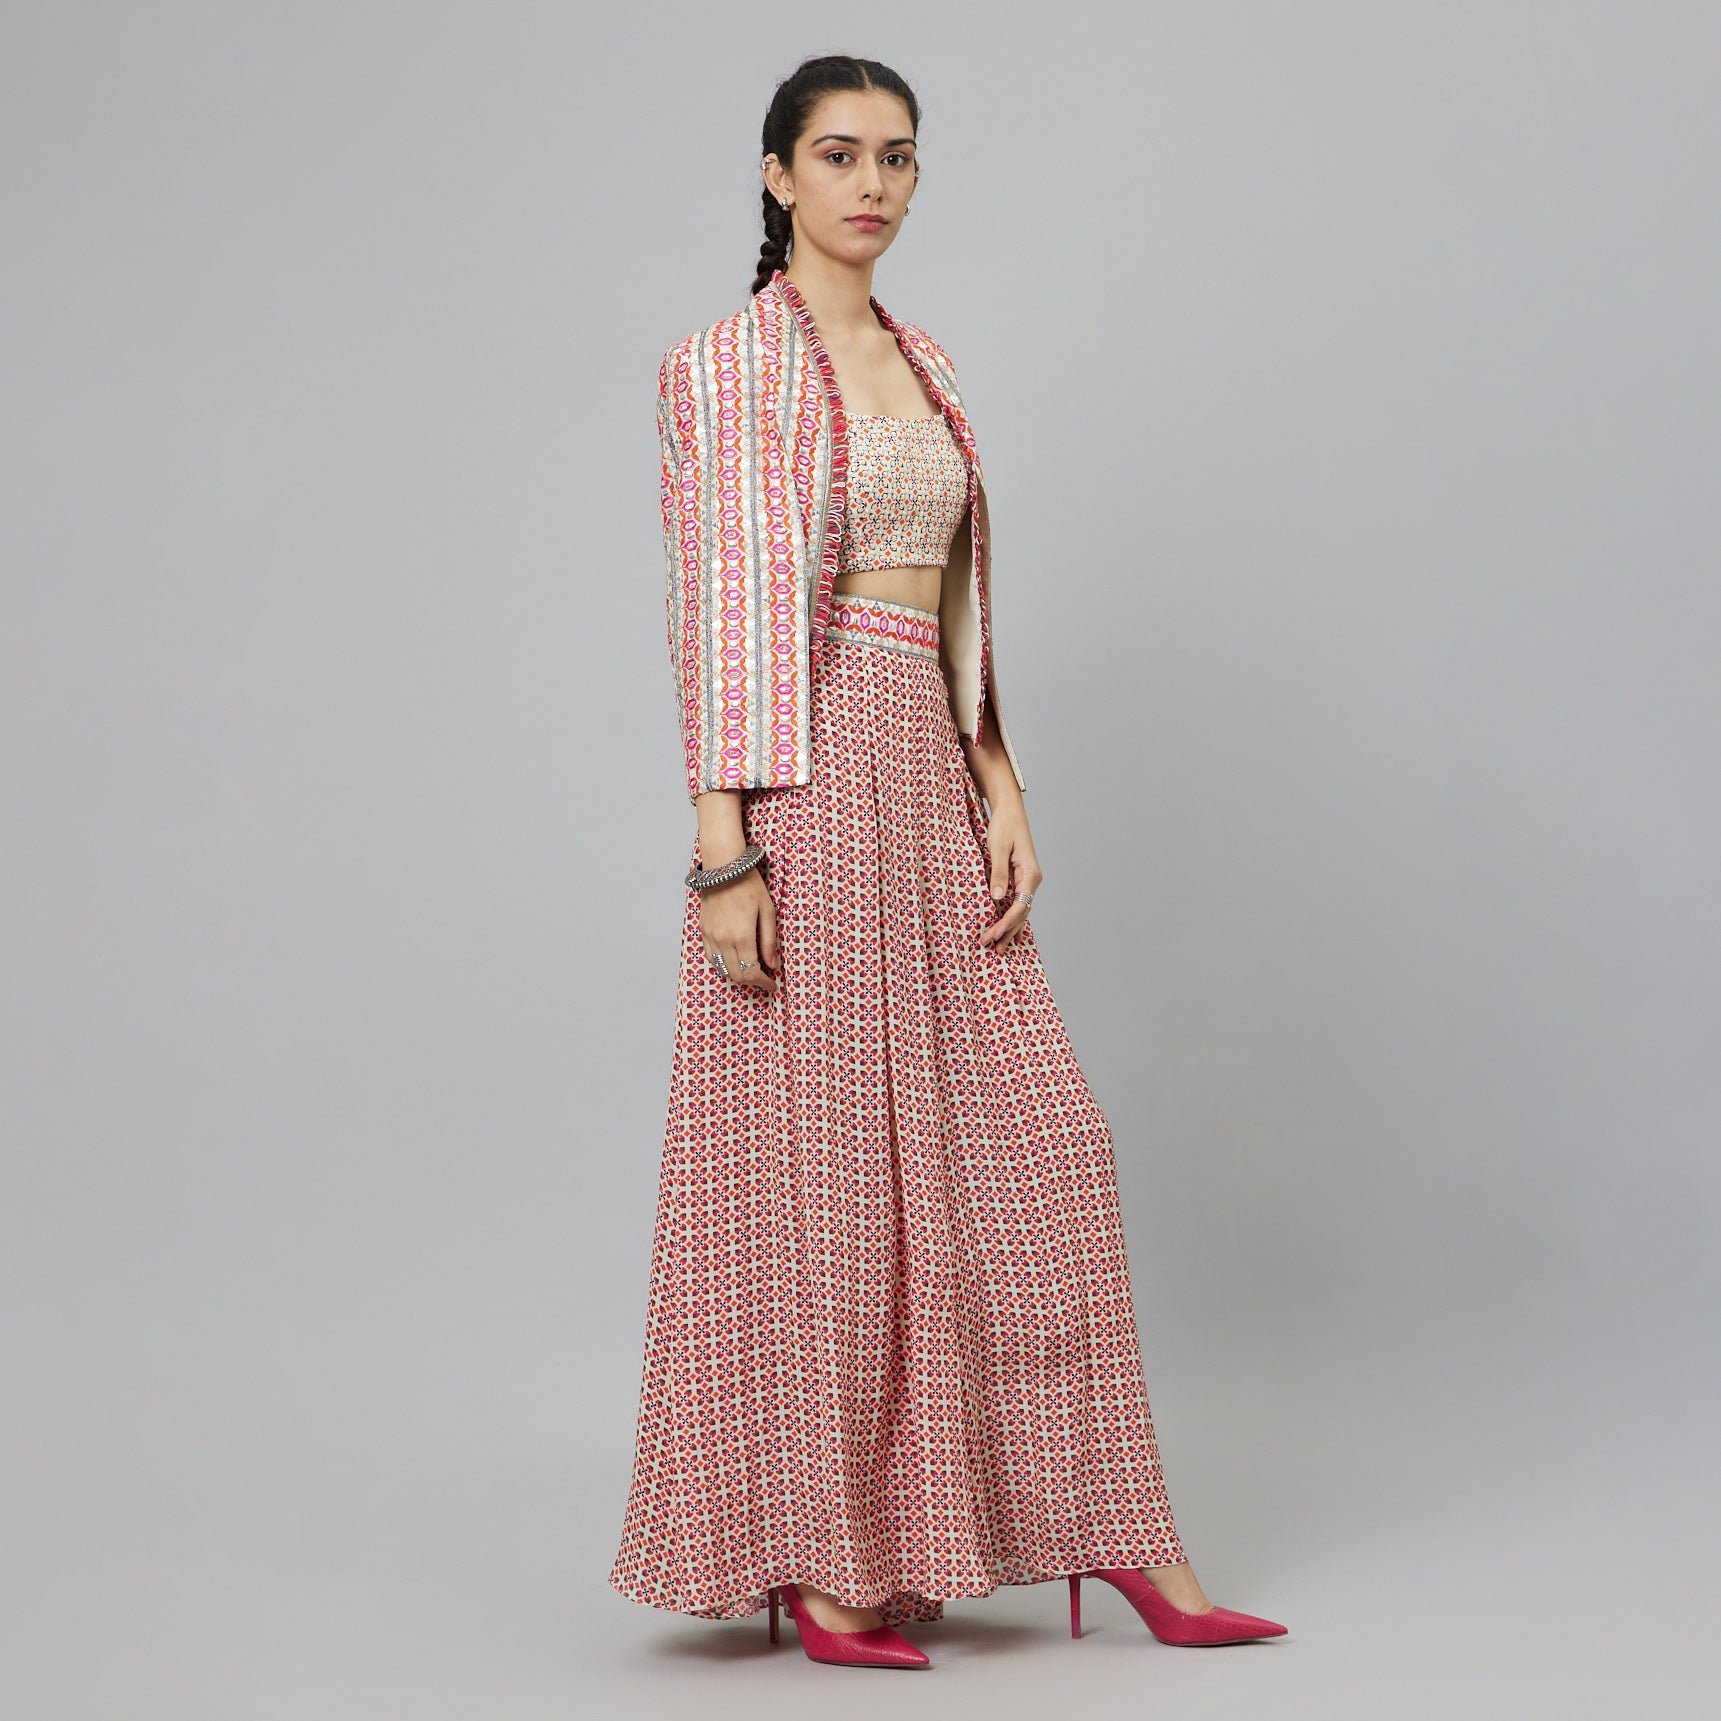 Nami Gown Jacket - Red, 44 at Rs 1650 | Fashion Apparel, Ladies Fashion  Garments, Women Fashion Clothing, Ladies Garments, Women Clothing - Bhumika  Viren Chheda, Mumbai | ID: 2851574813491